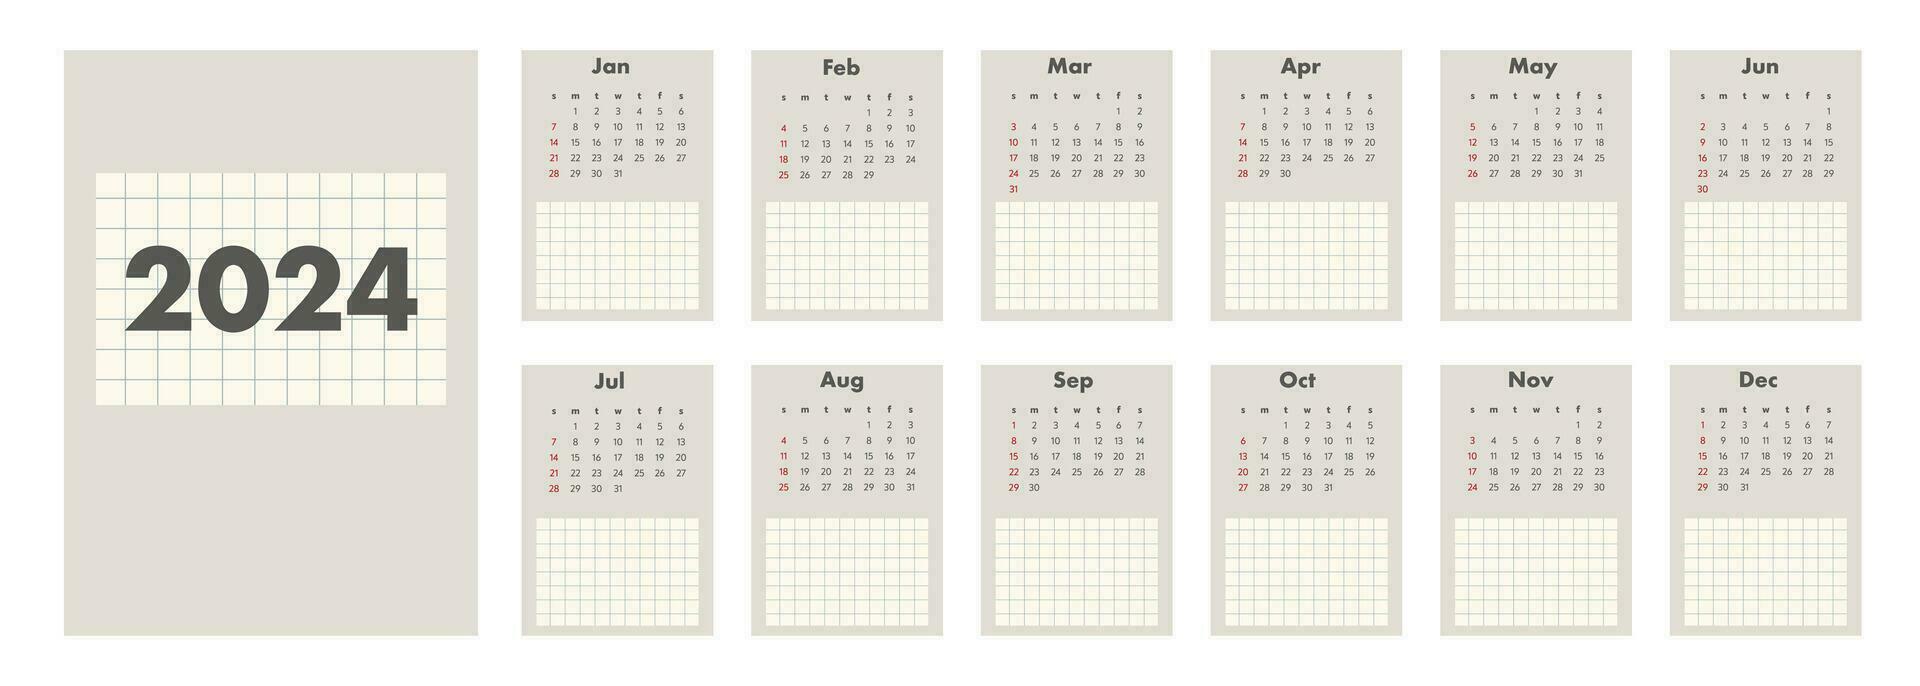 Monthly calendar for 2024. vertical calendar. The week starts on Sunday. vector